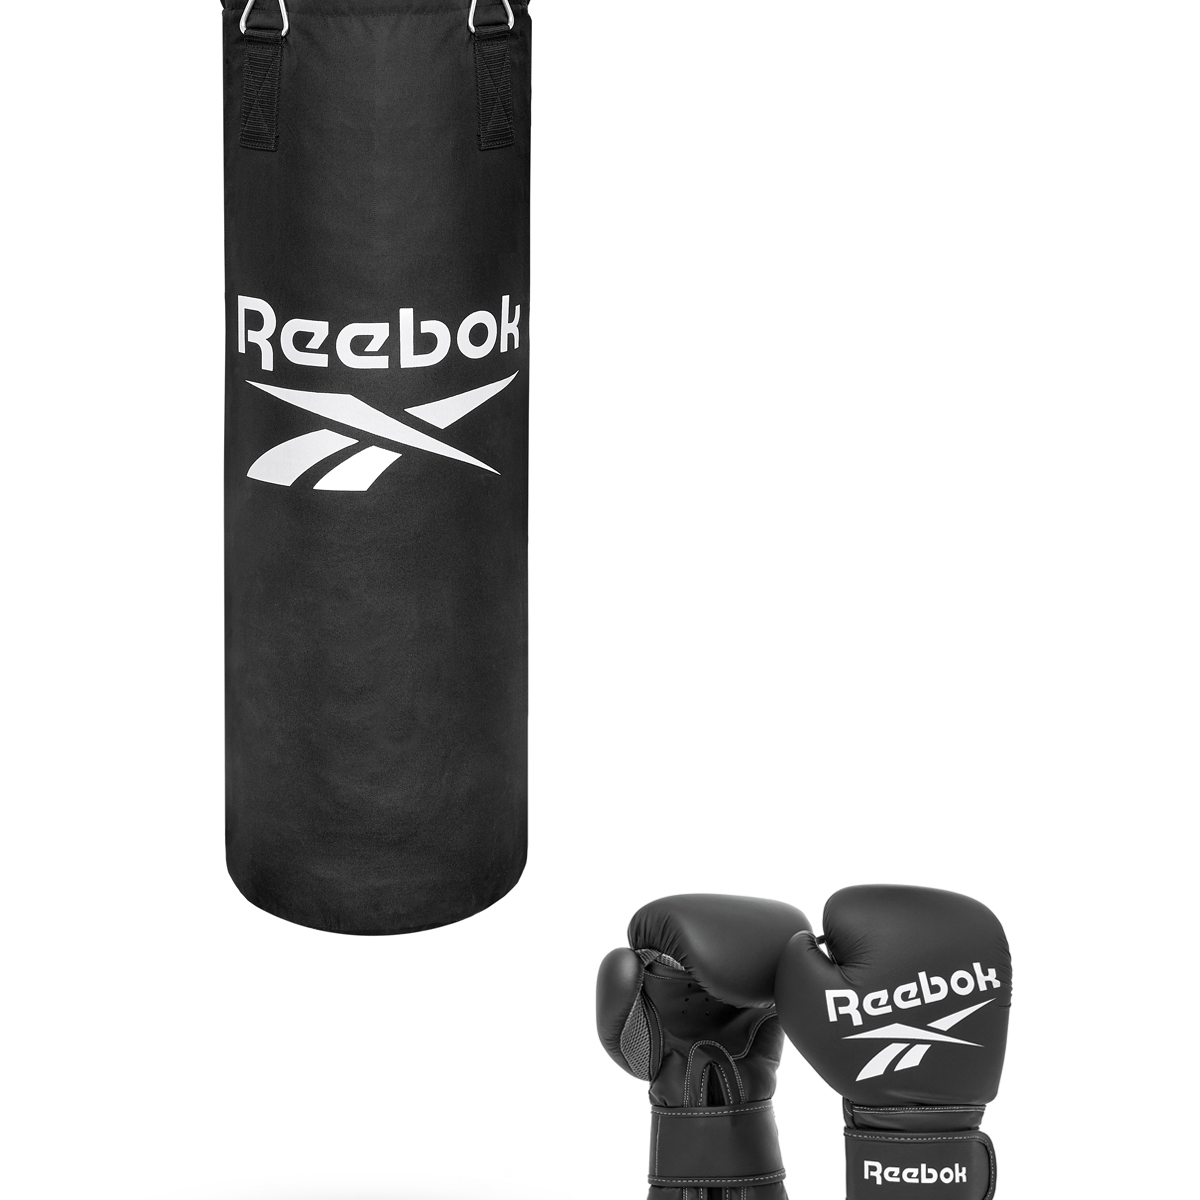 Reebok Fitness 3ft Punchbag + Boxing Gloves Set